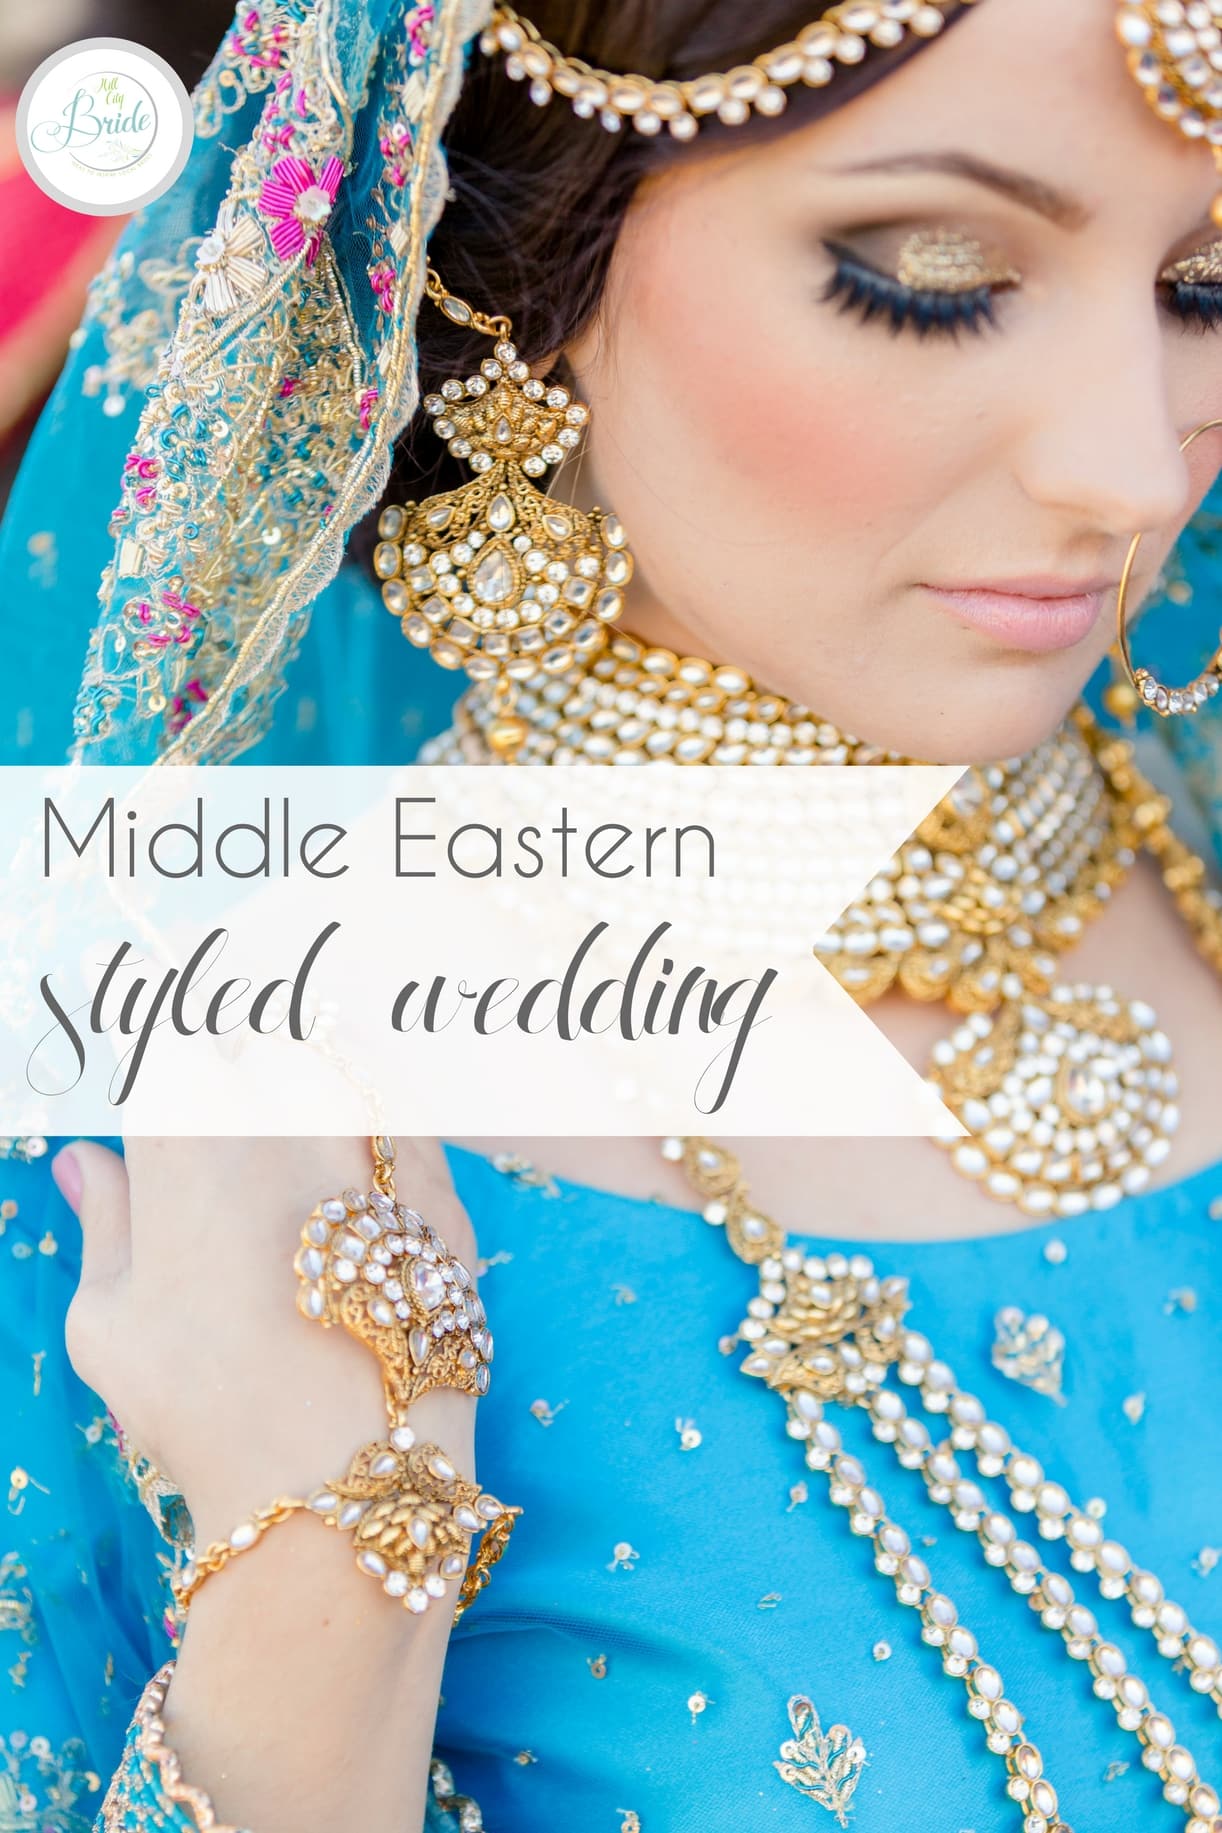 Middle Eastern Wedding | Hill City Bride Virginia Wedding Blog Travel Destination